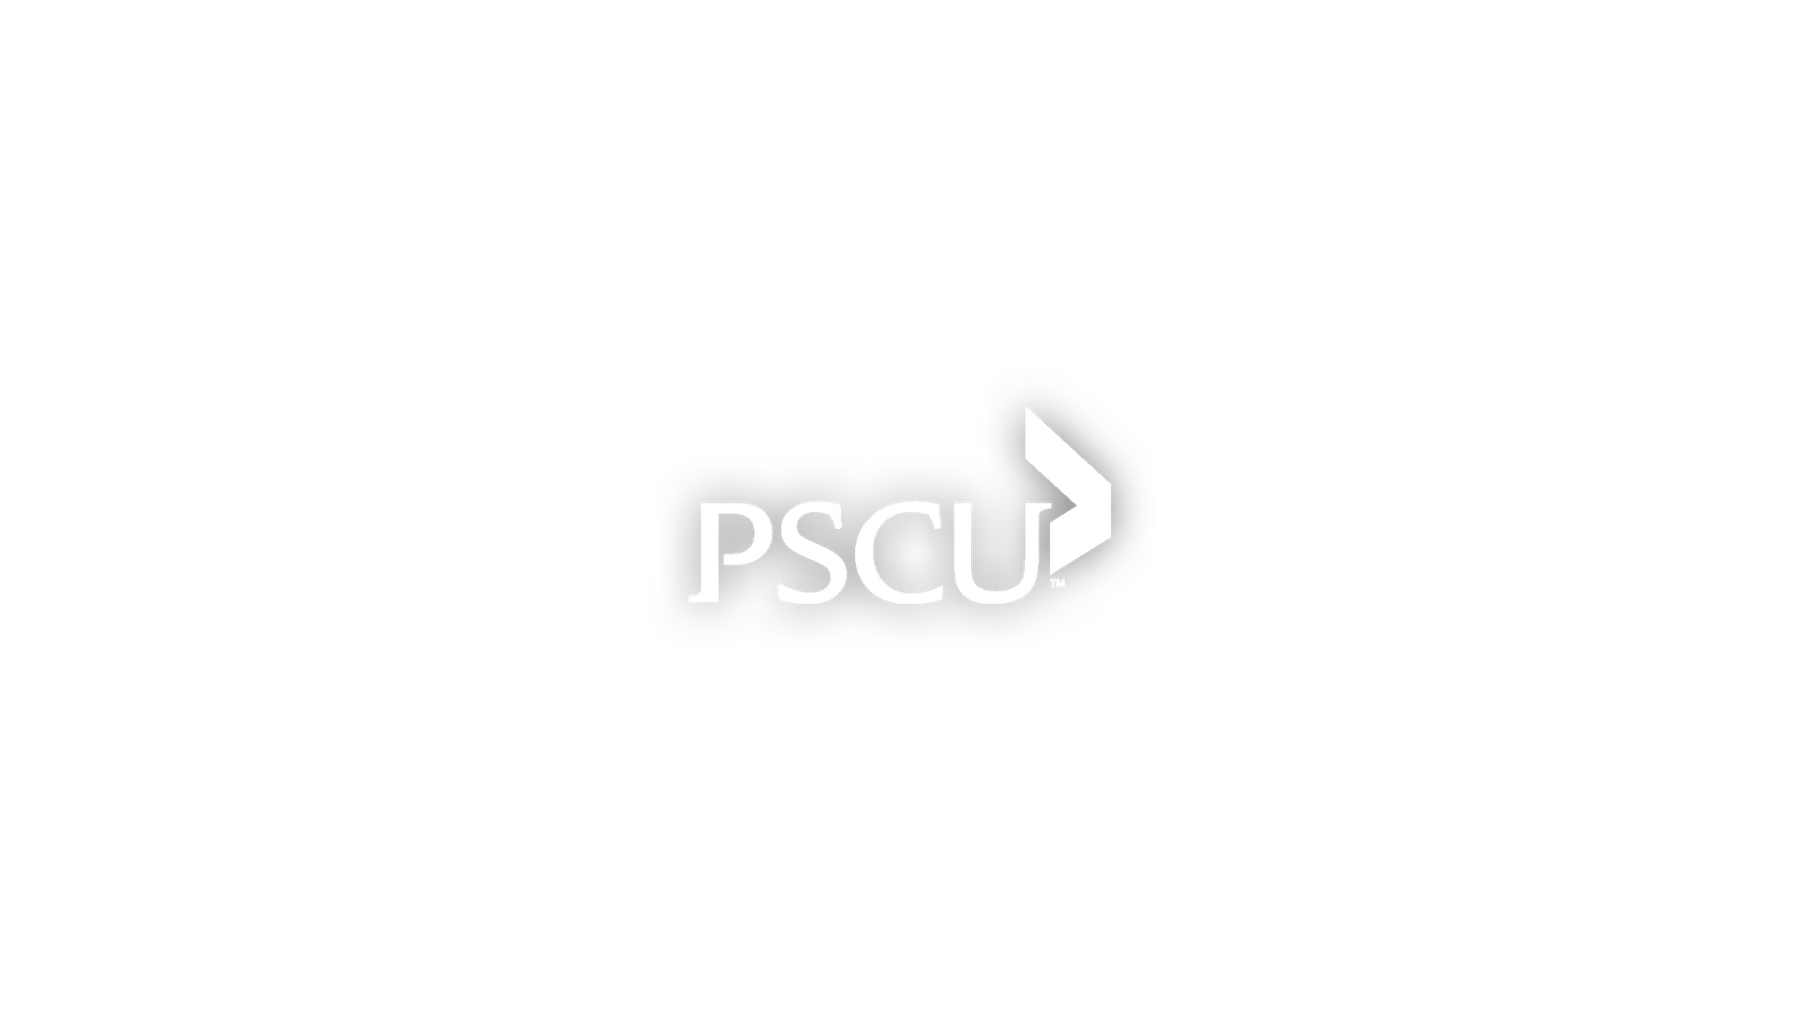 Pscu logo center